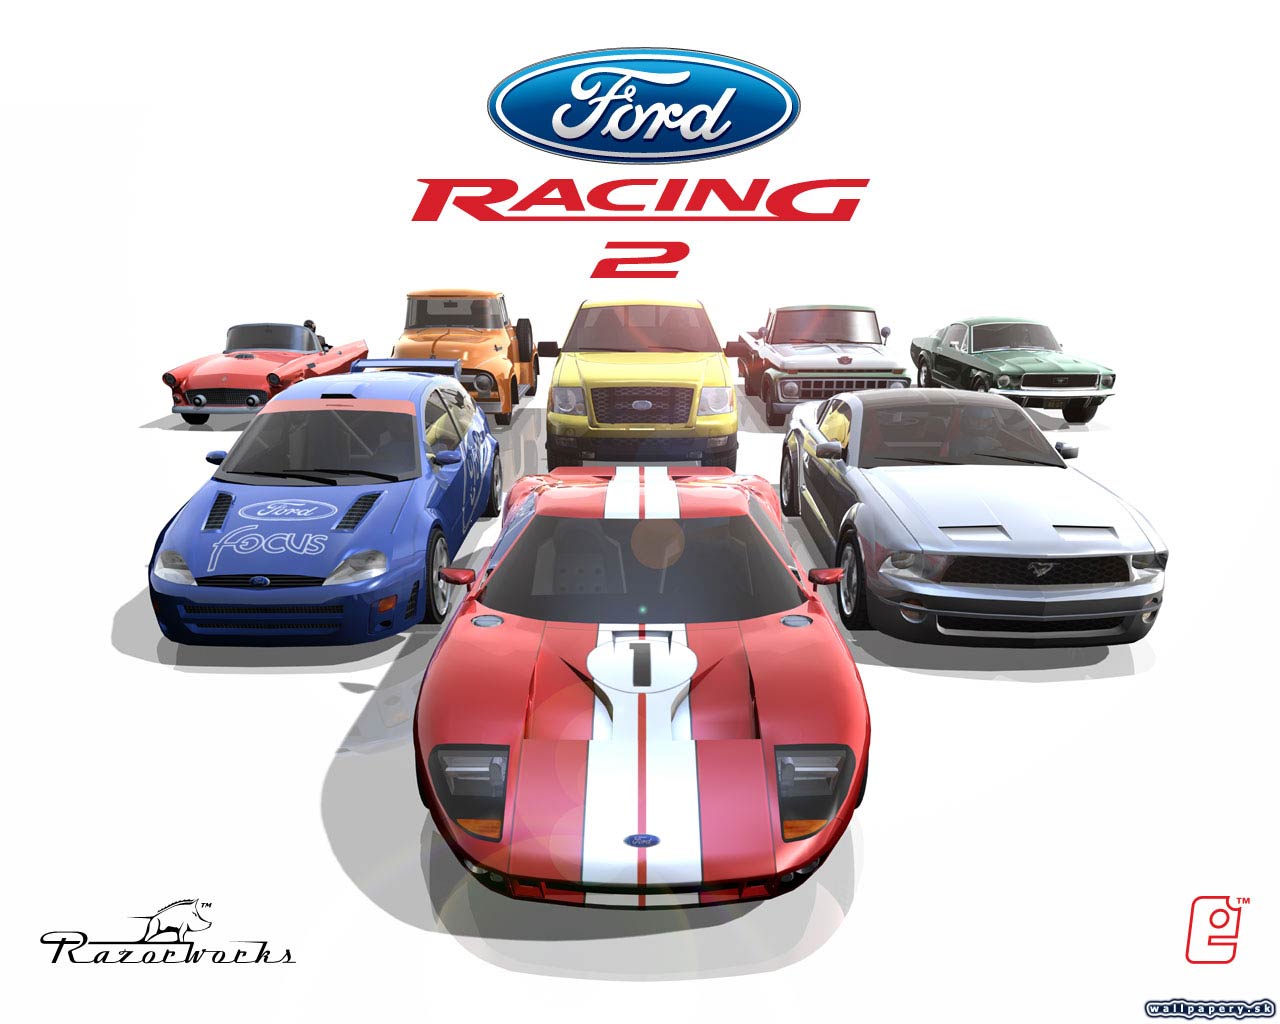 Ford Racing 2 - wallpaper 1